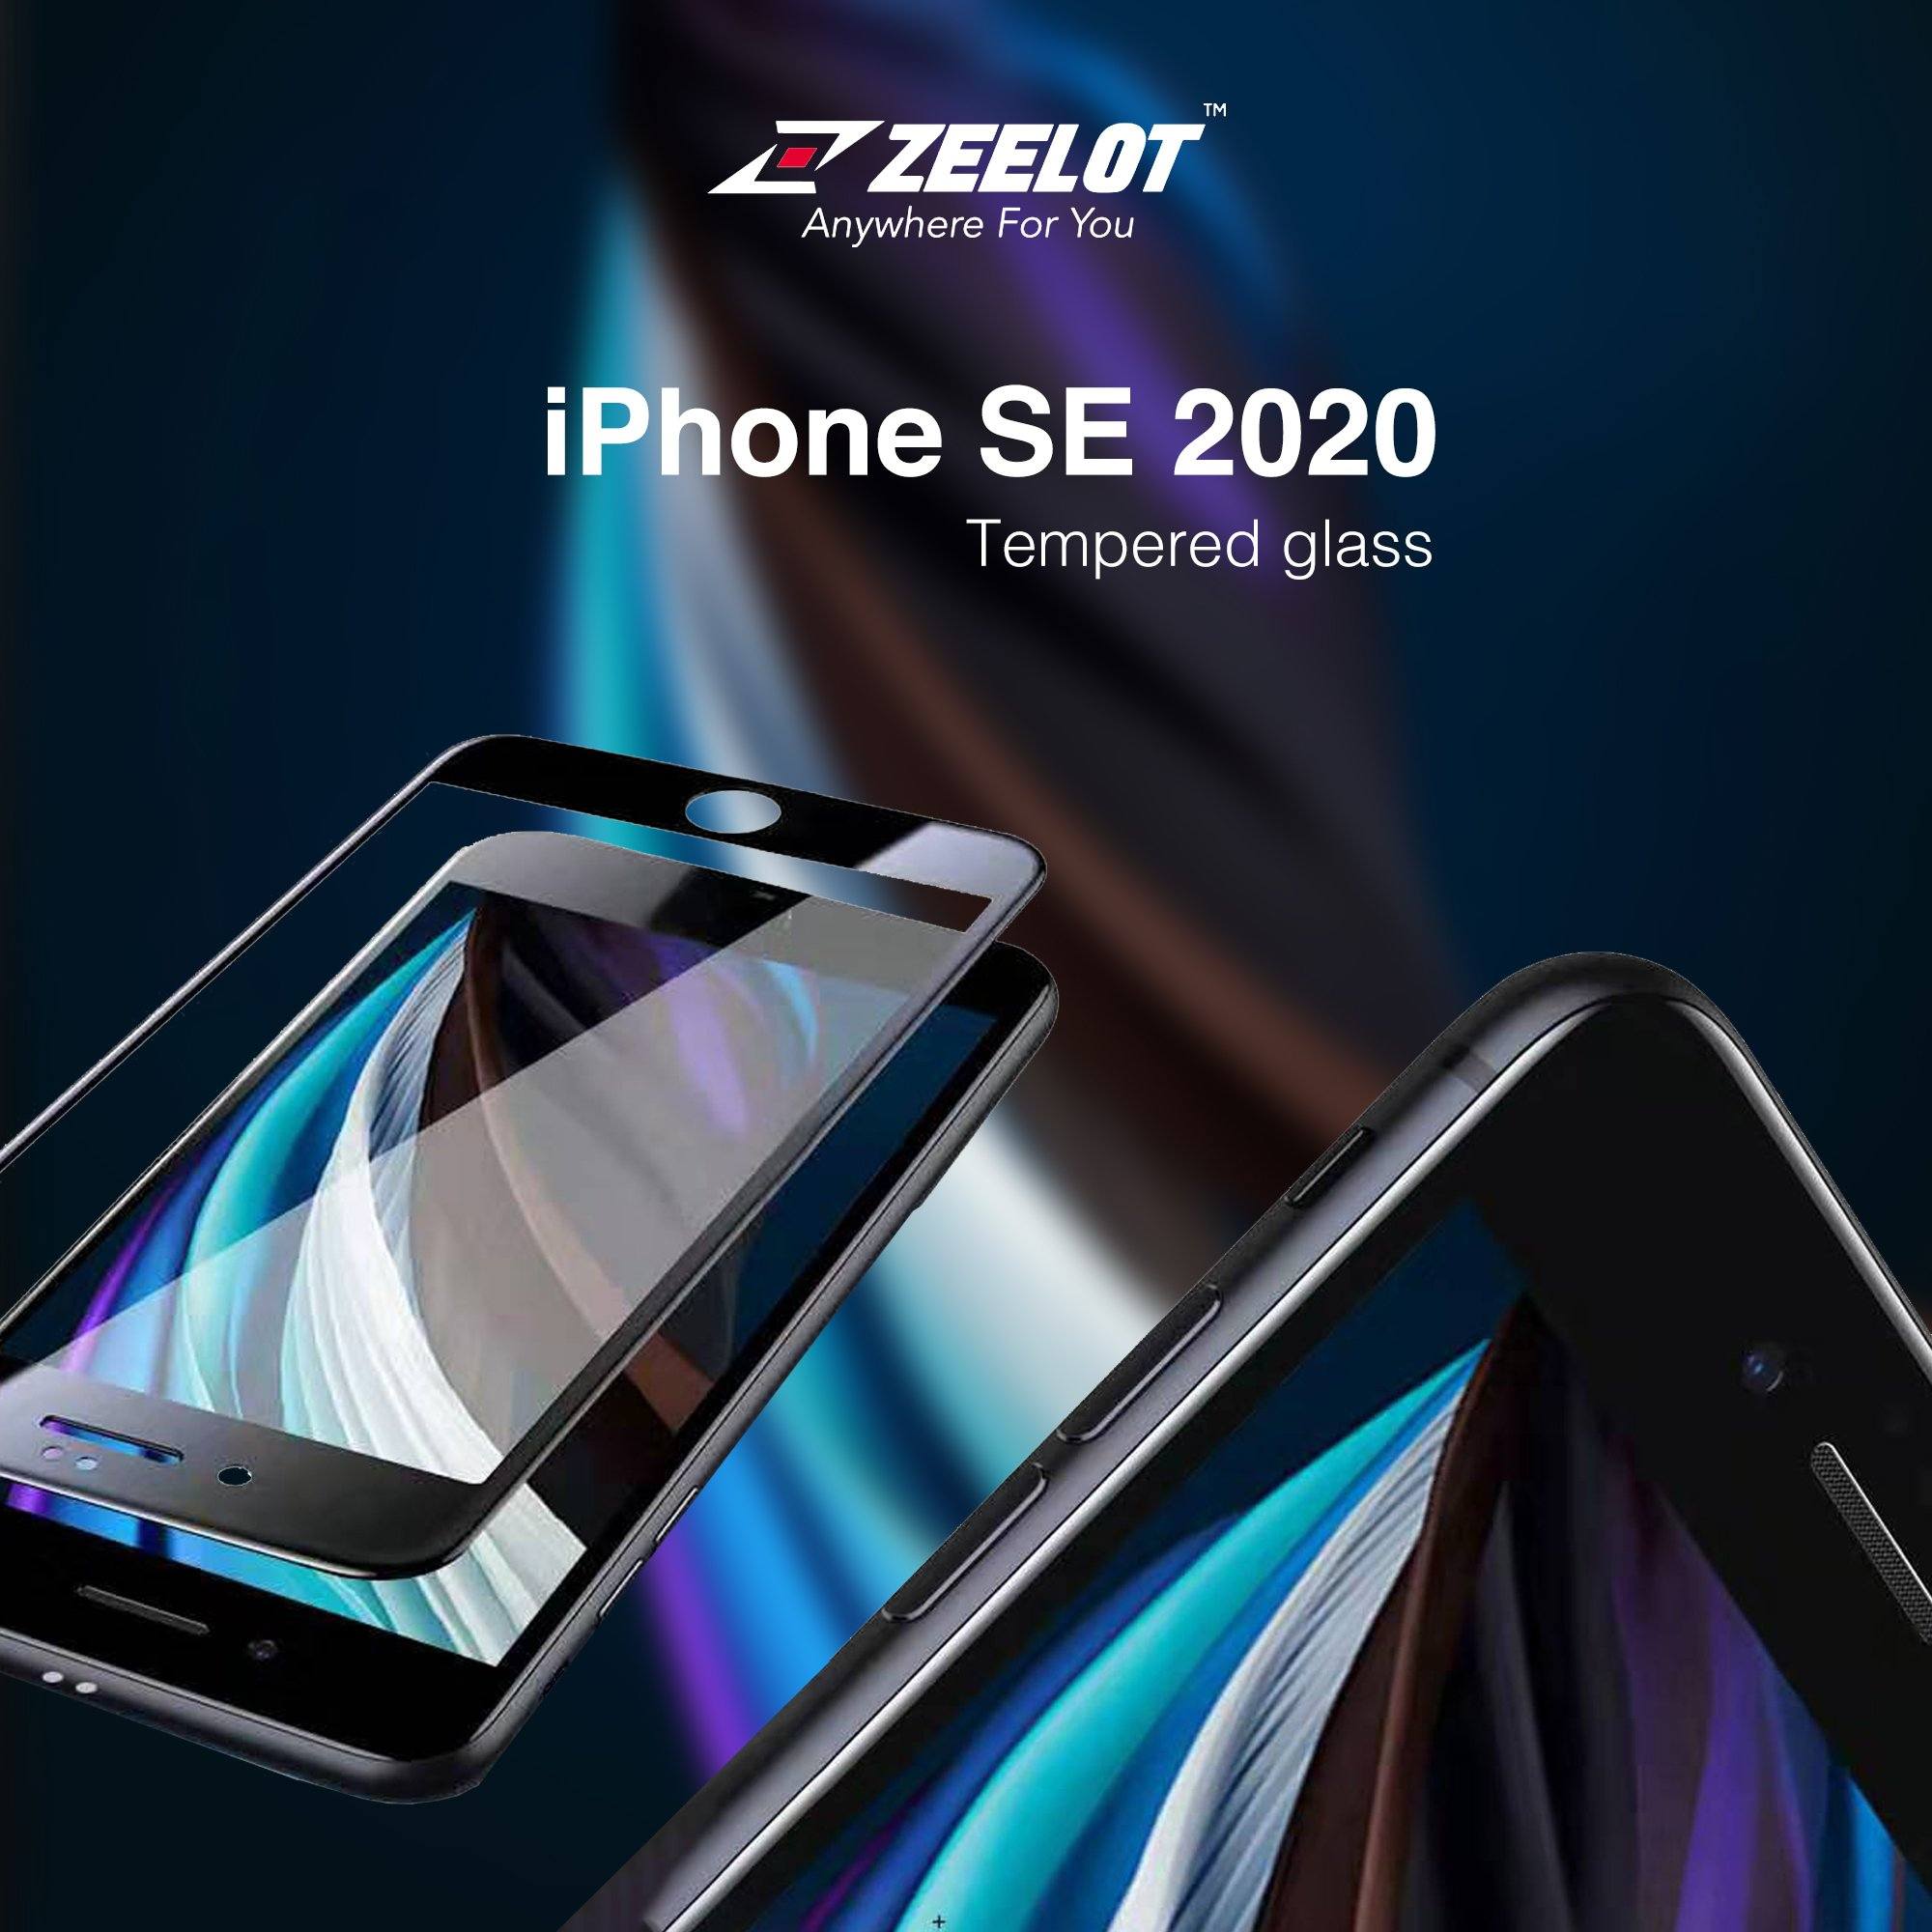 ZEELOT PureGlass 2.5D Tempered Glass Screen Protector for iPhone SE 2nd Generation, Matte iPhone SE ZEELOT 